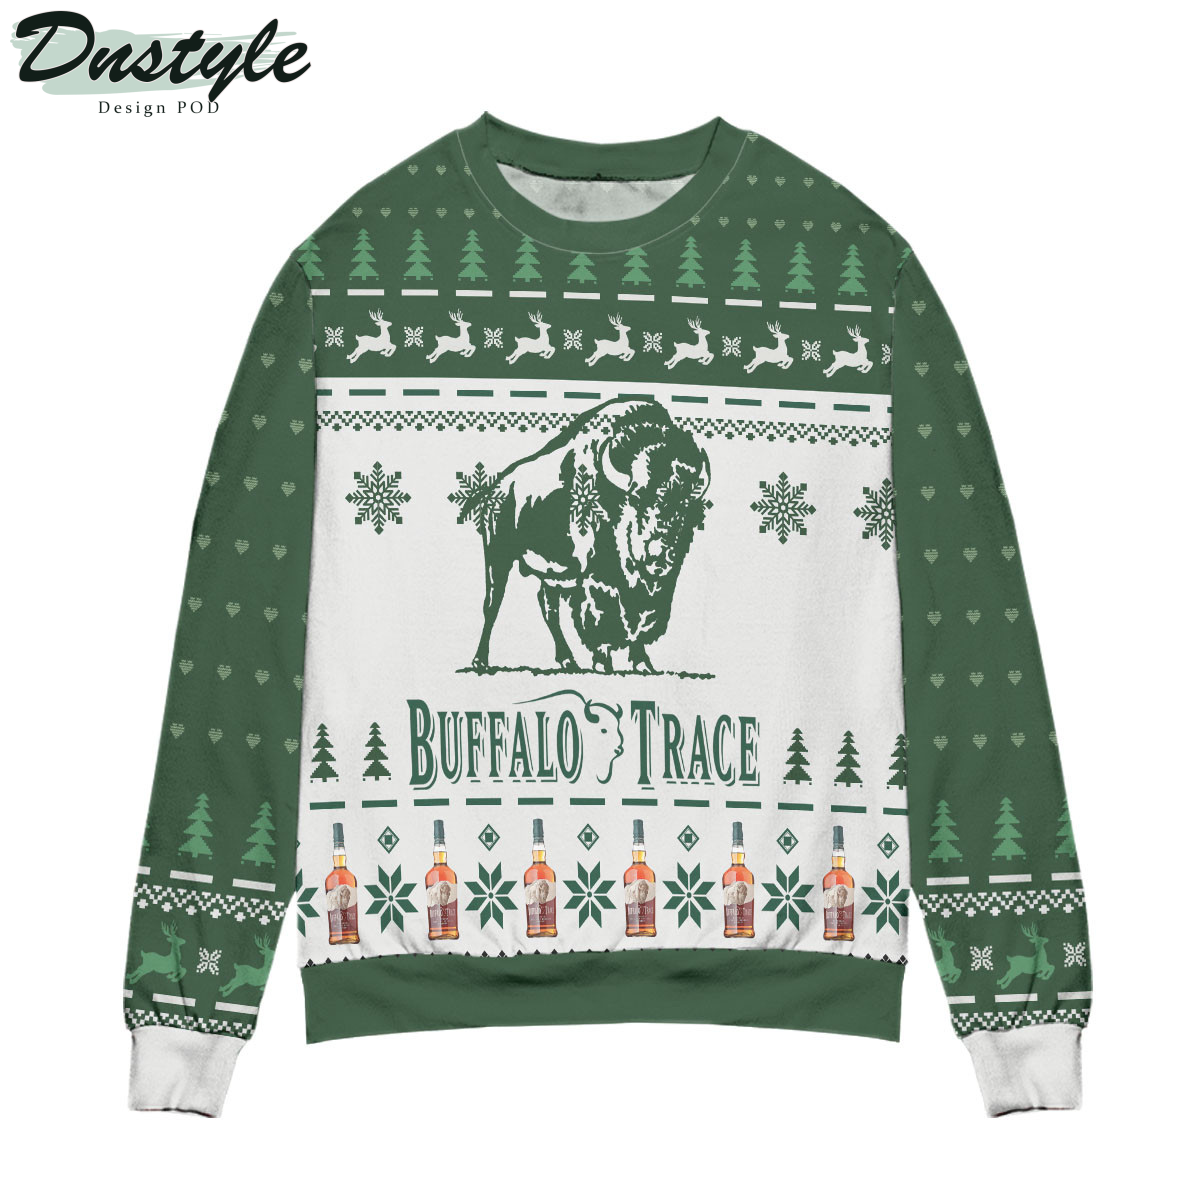 Buffalo Trace Kentucky Straight Bourbon Whiskey Ugly Christmas Sweater